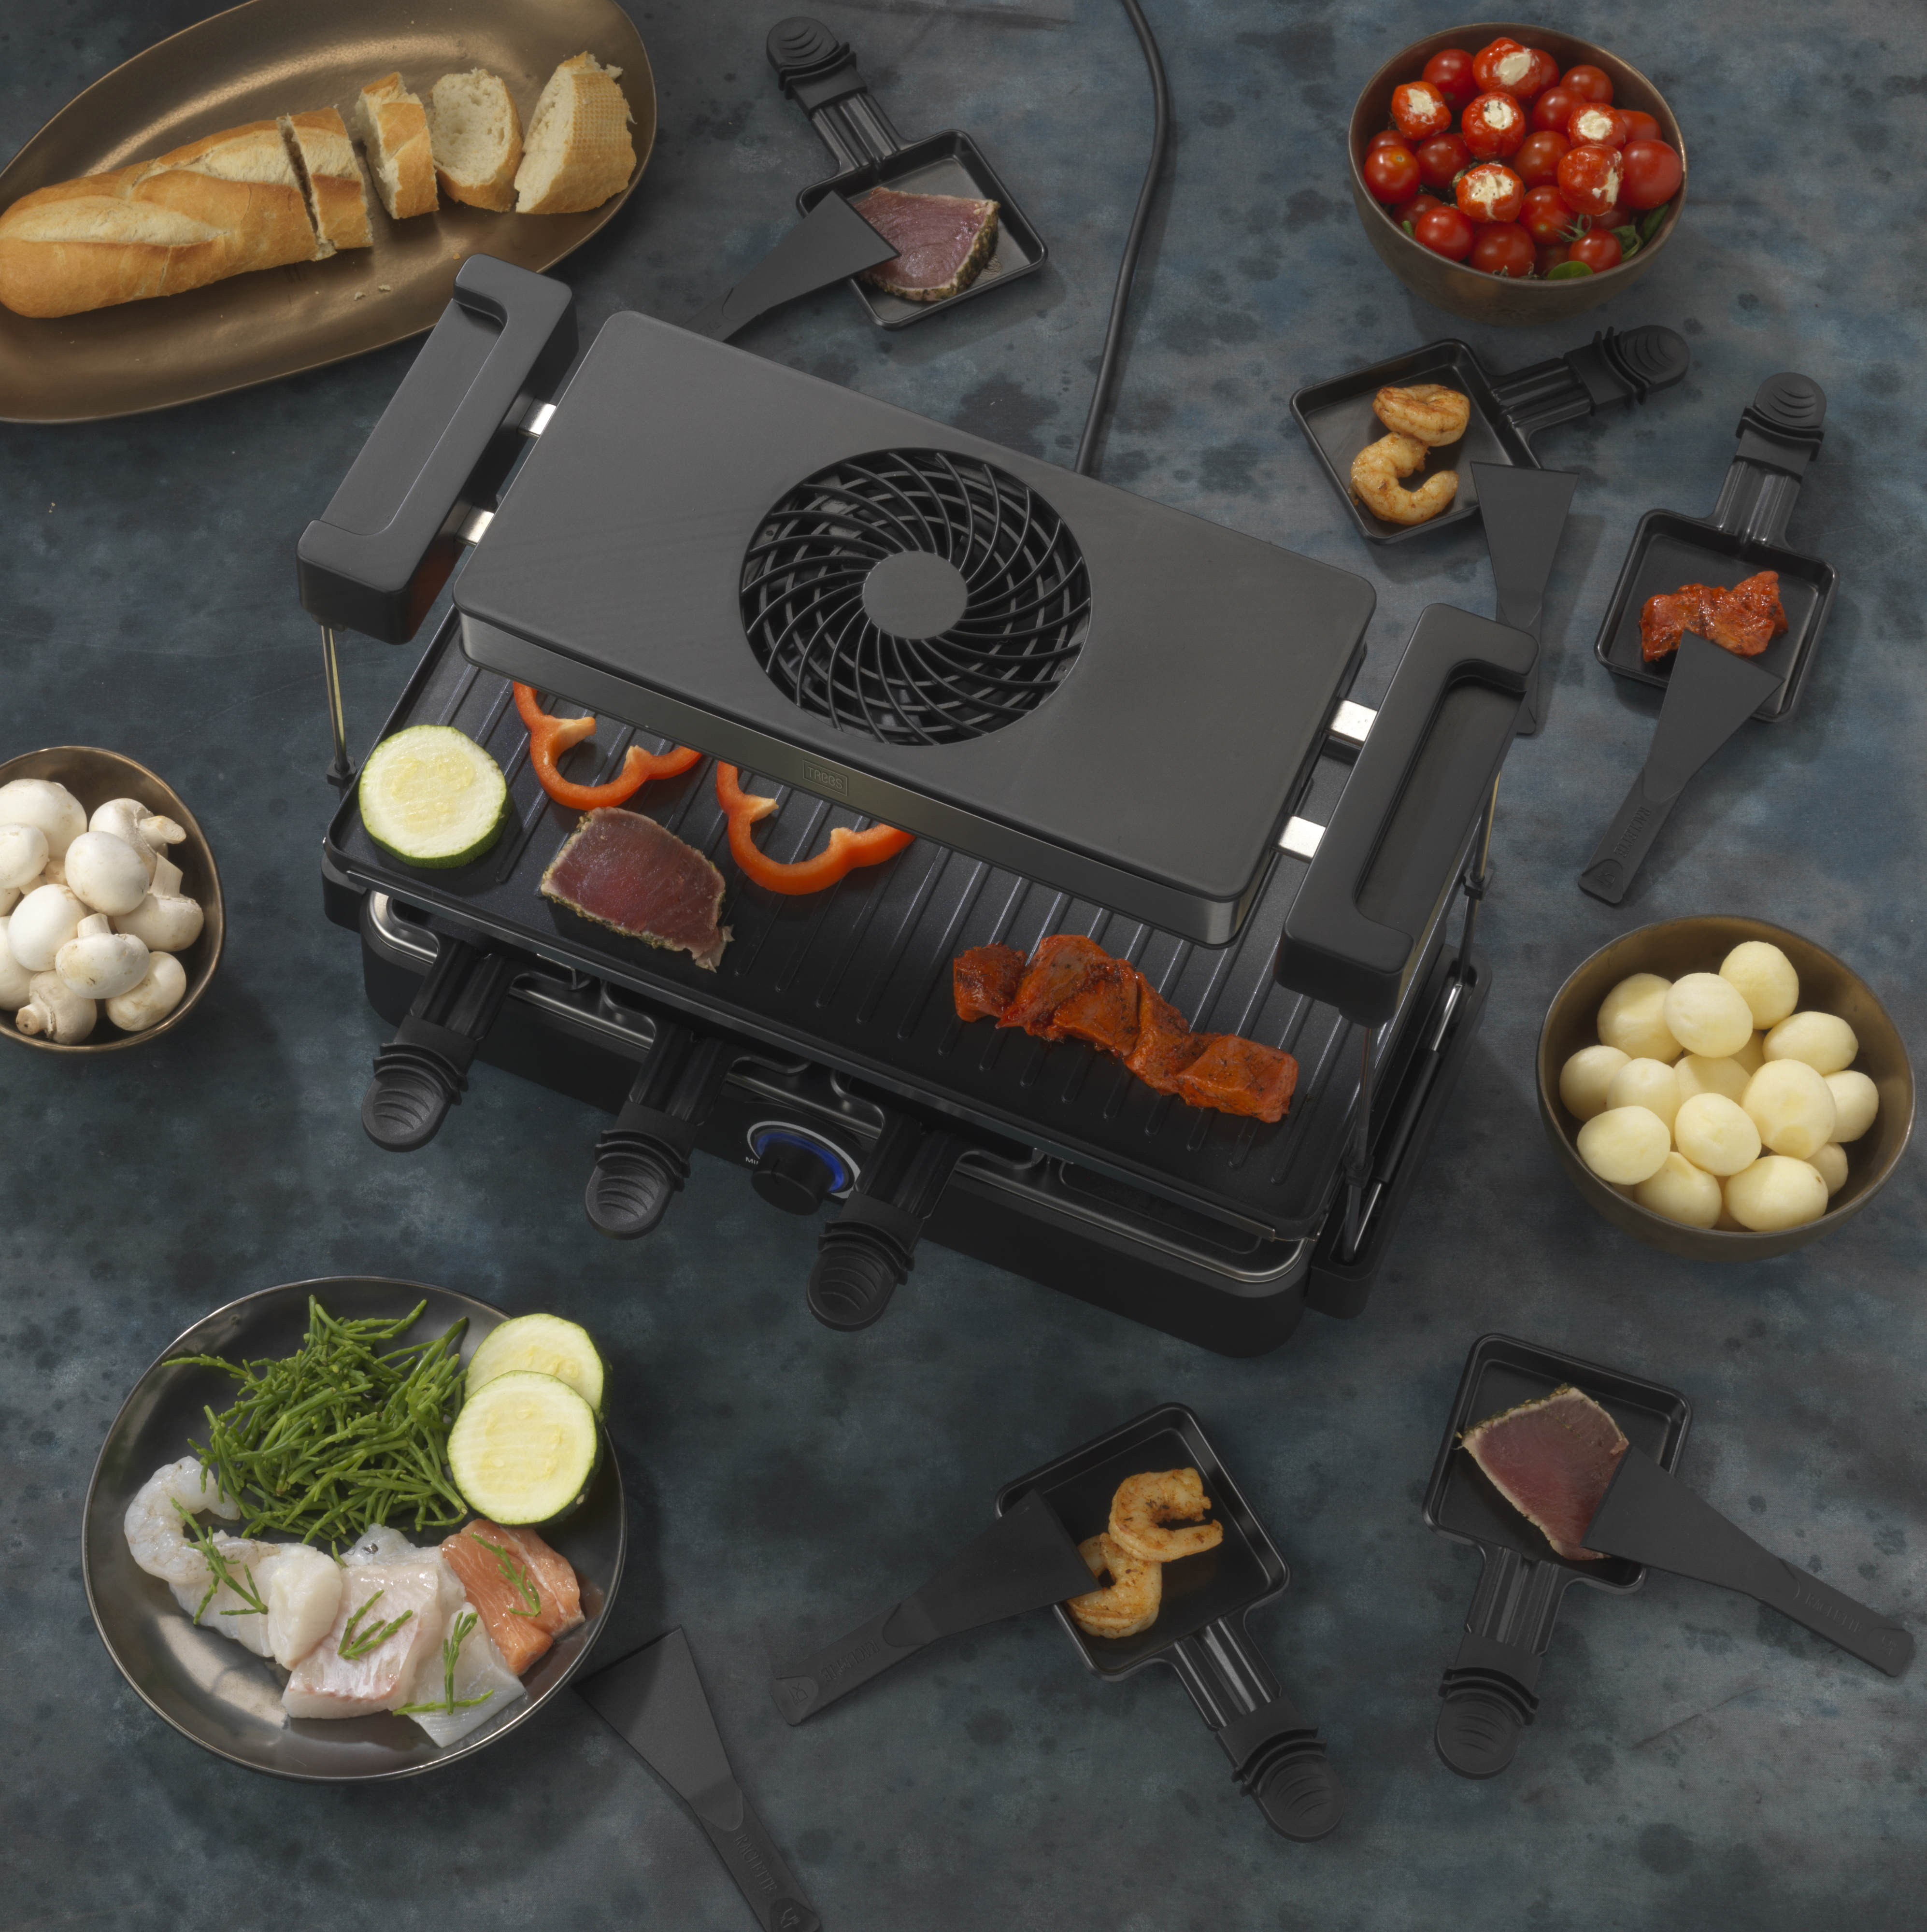 15110 Raclette - Gourmet-Chefgrill - TREBS Dunstabzug mit